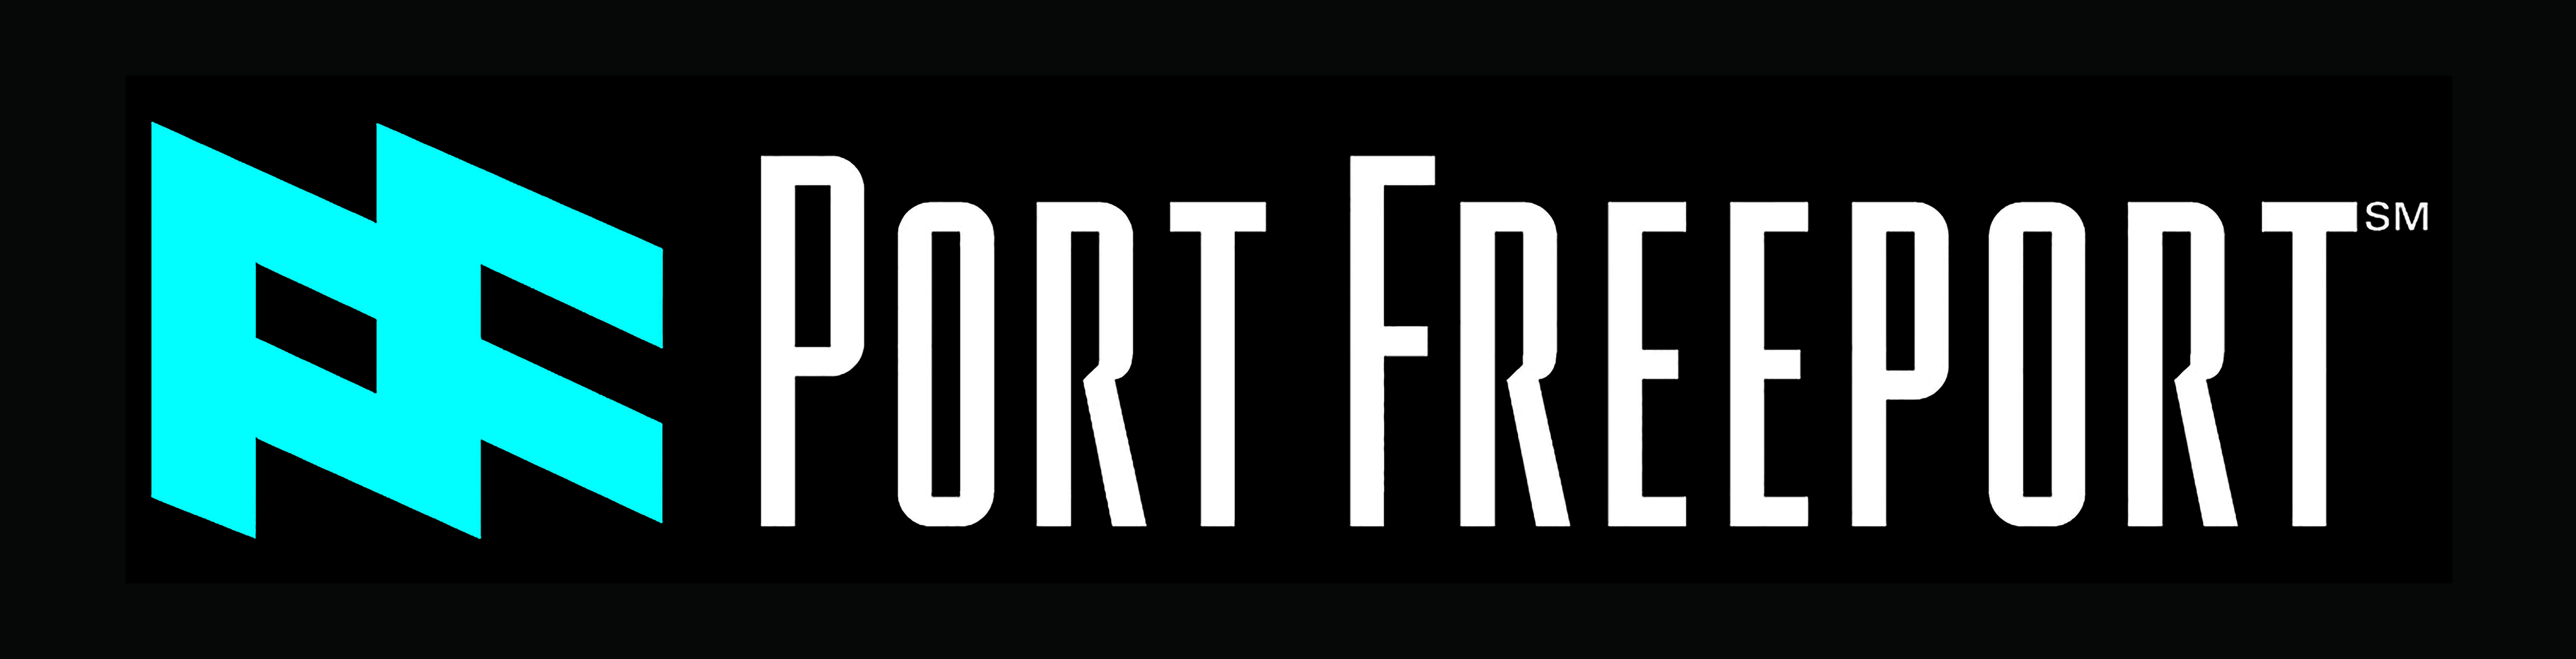 Freeport Logo - Port Freeport. Ports in TX